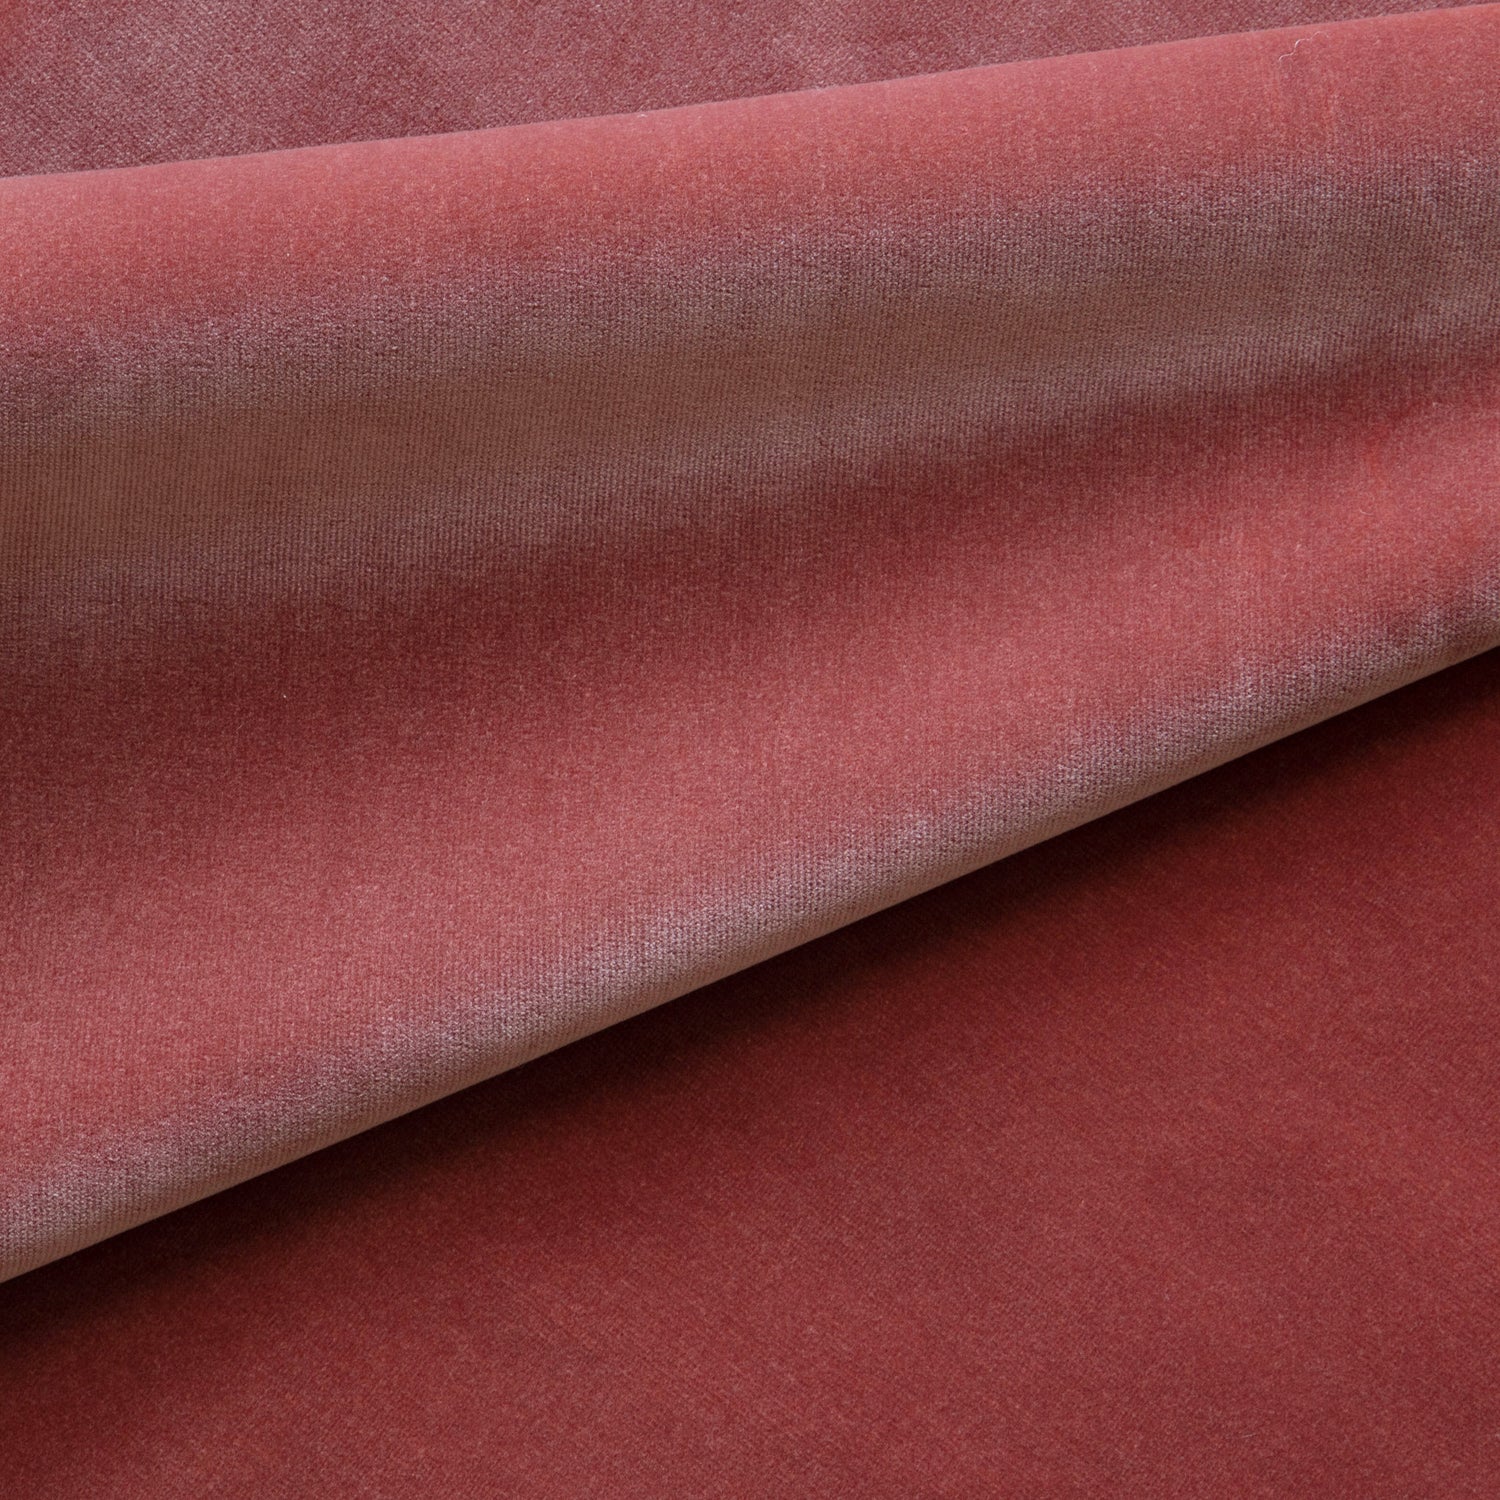 Coral Velvet Fabric Close-Up